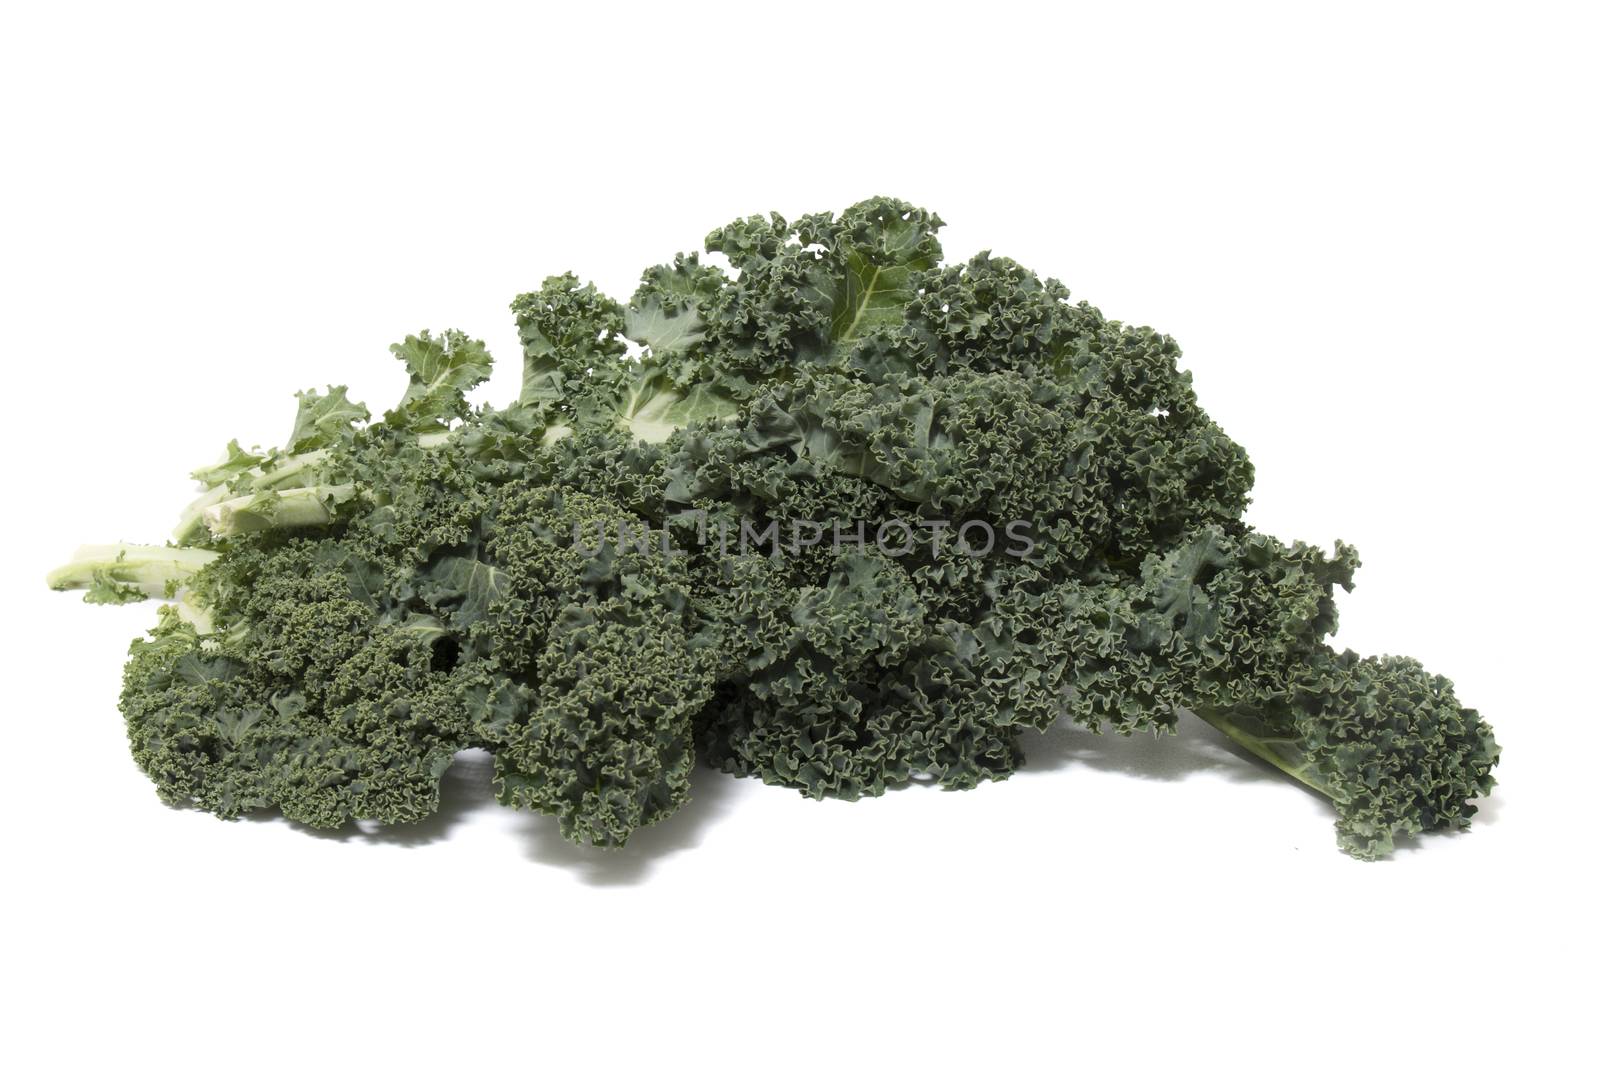 Curly leaf kale by membio